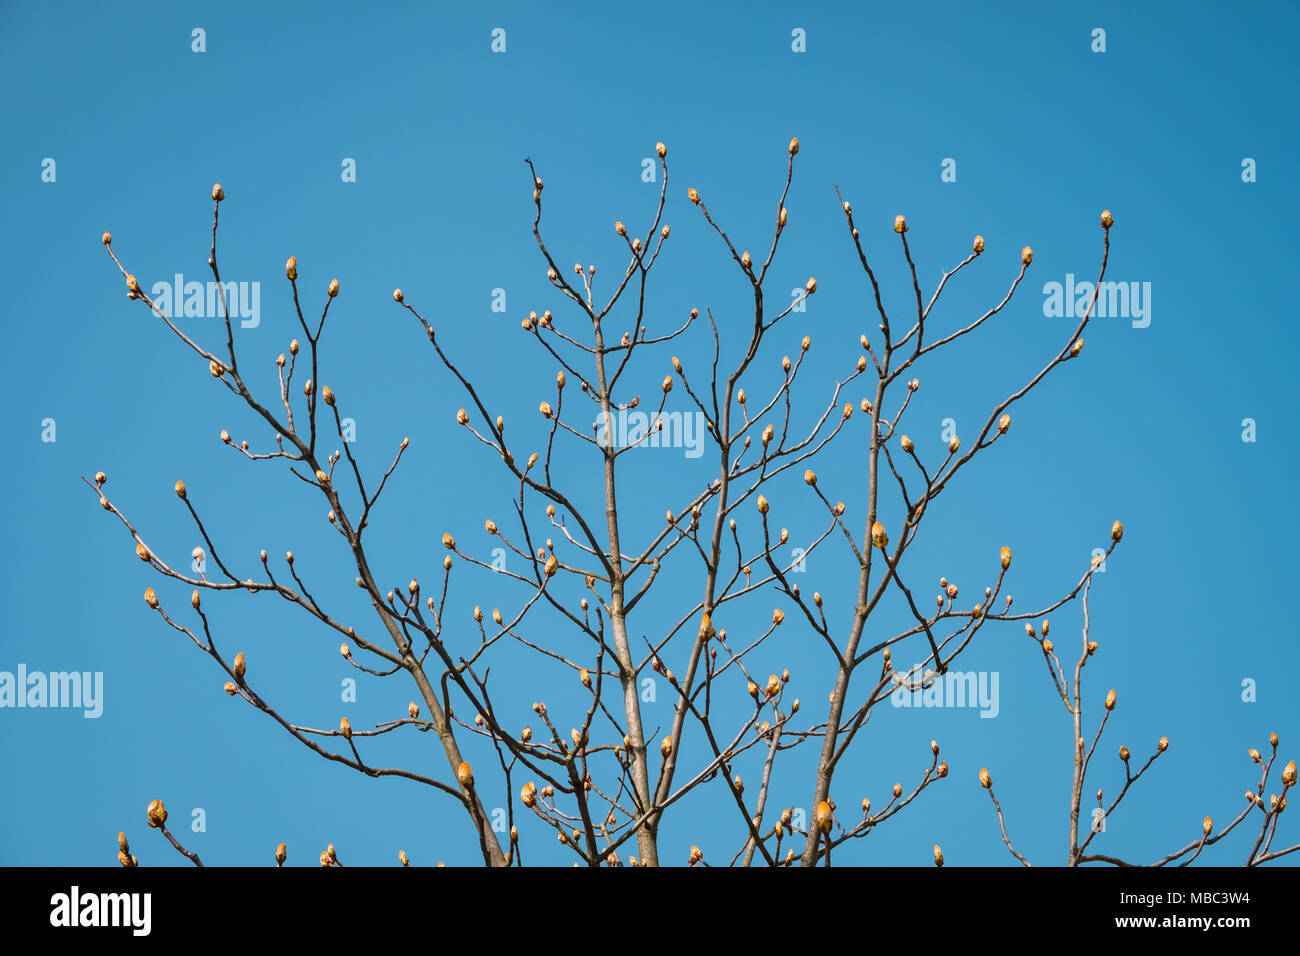 Knospen am Baum vor dem Blühen - Frühling saison Konzept - Stockfoto